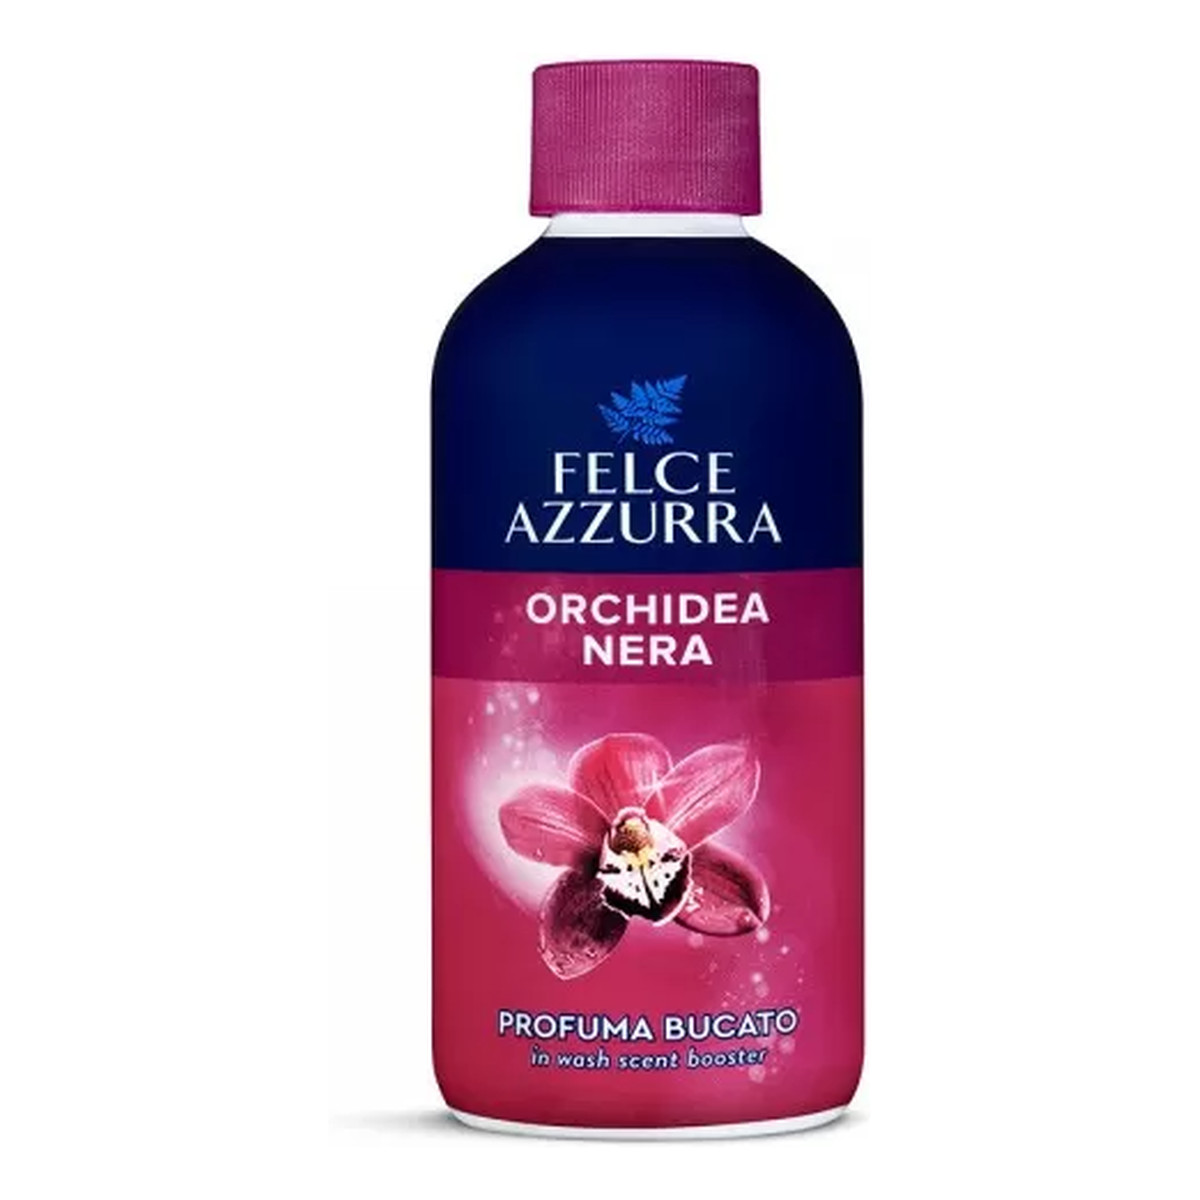 Felce Azzurra Booster zapachowy do prania Black Orchid 220ml